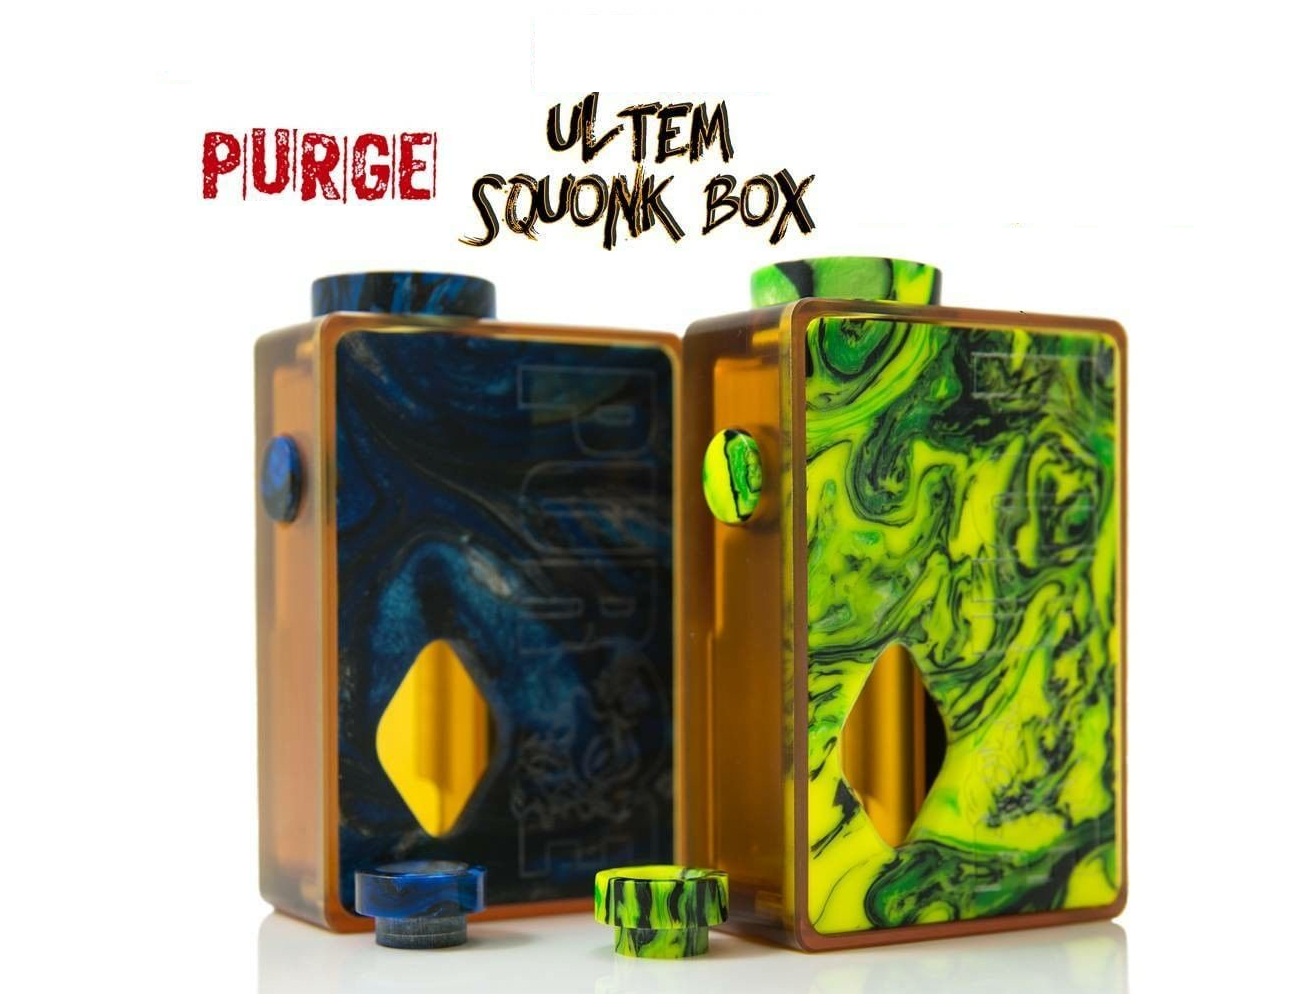 Purge Ultem Squonk Box - красавец с заоблачной ценой...